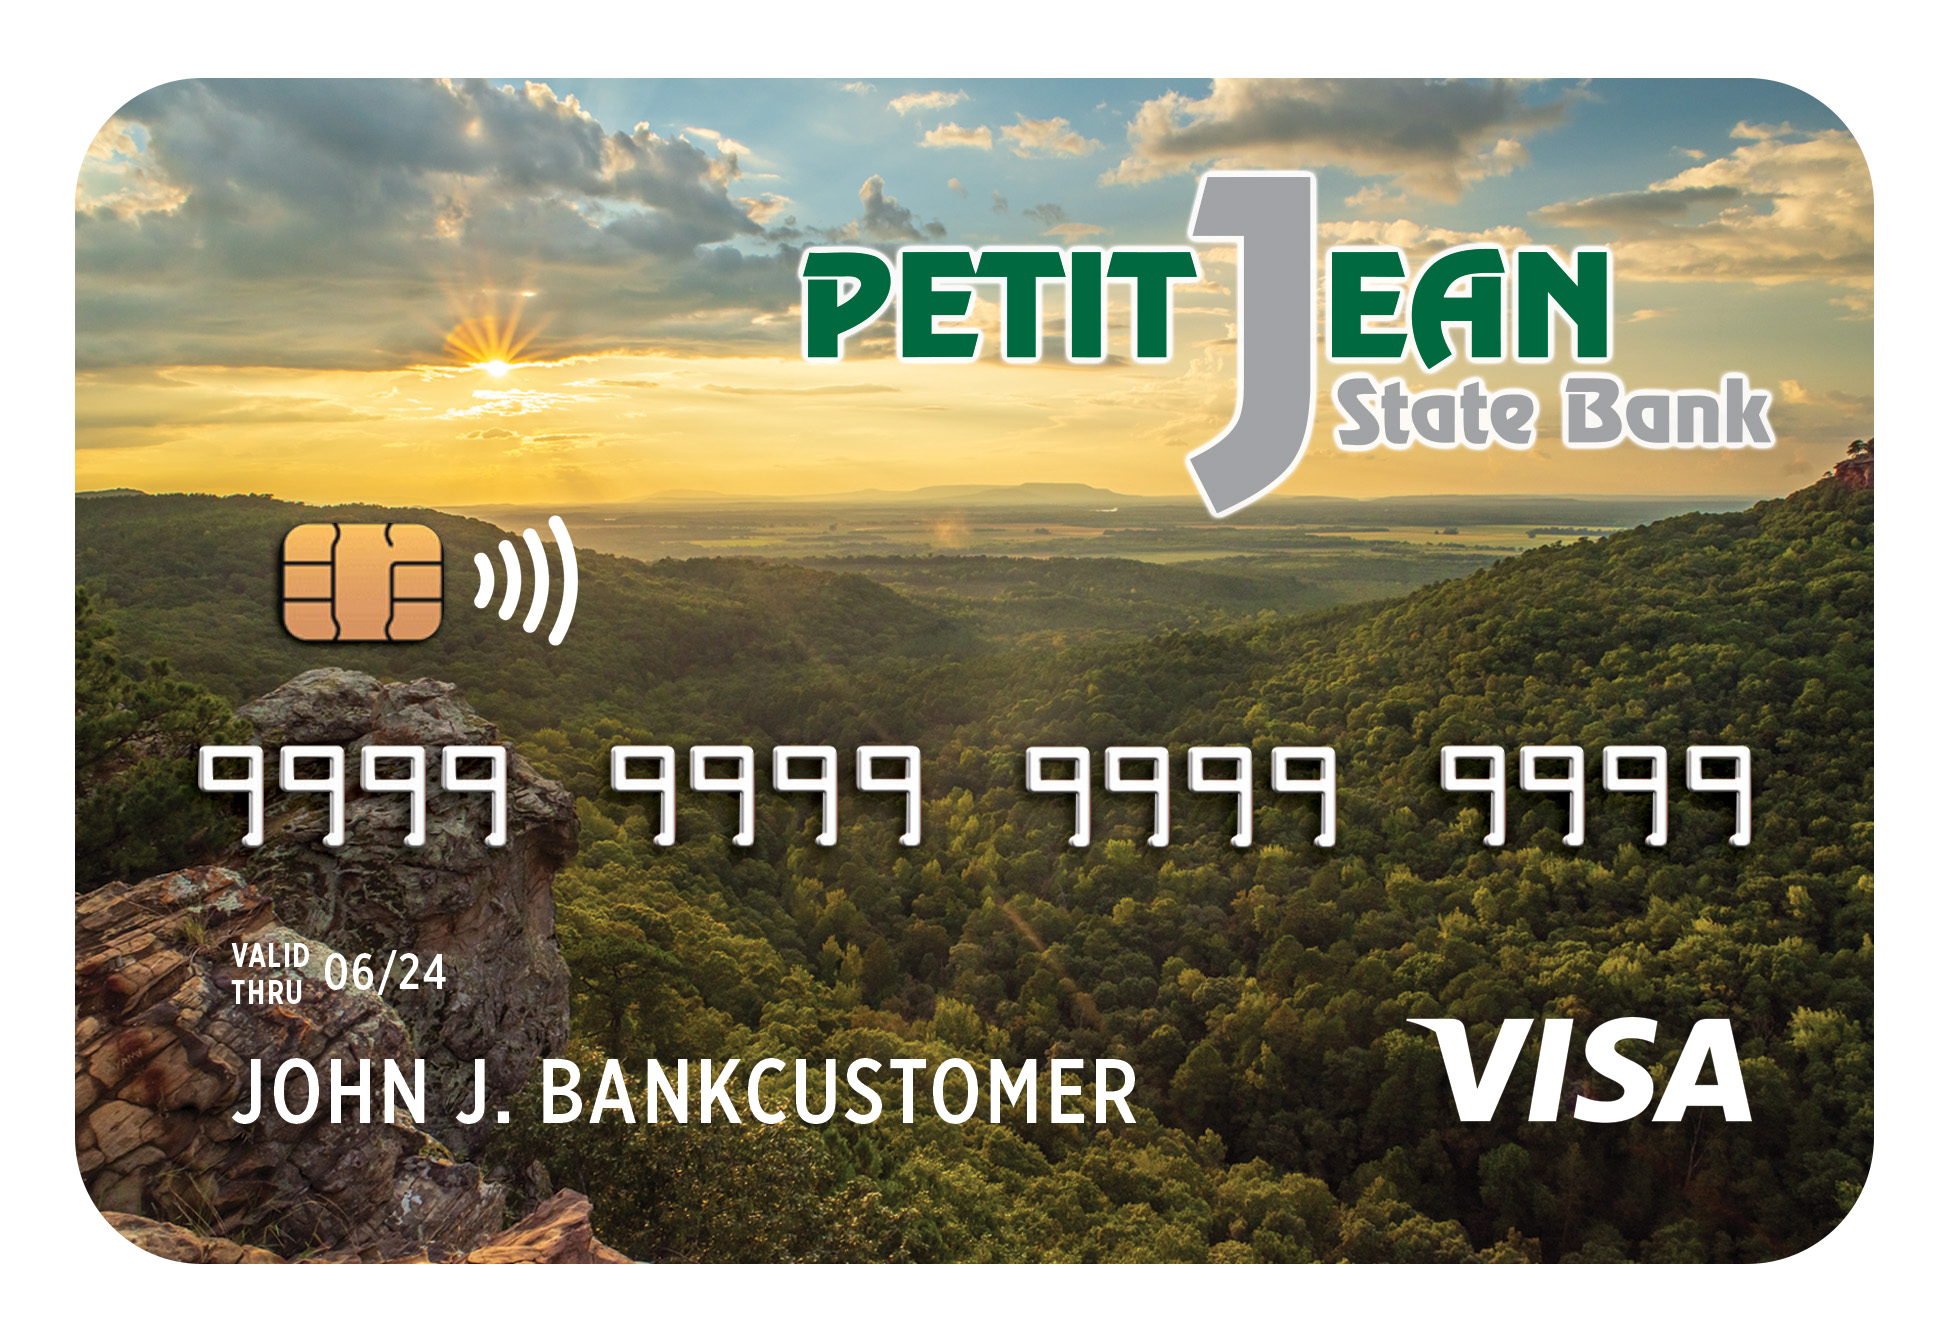 PJSB-DebitCard-custom